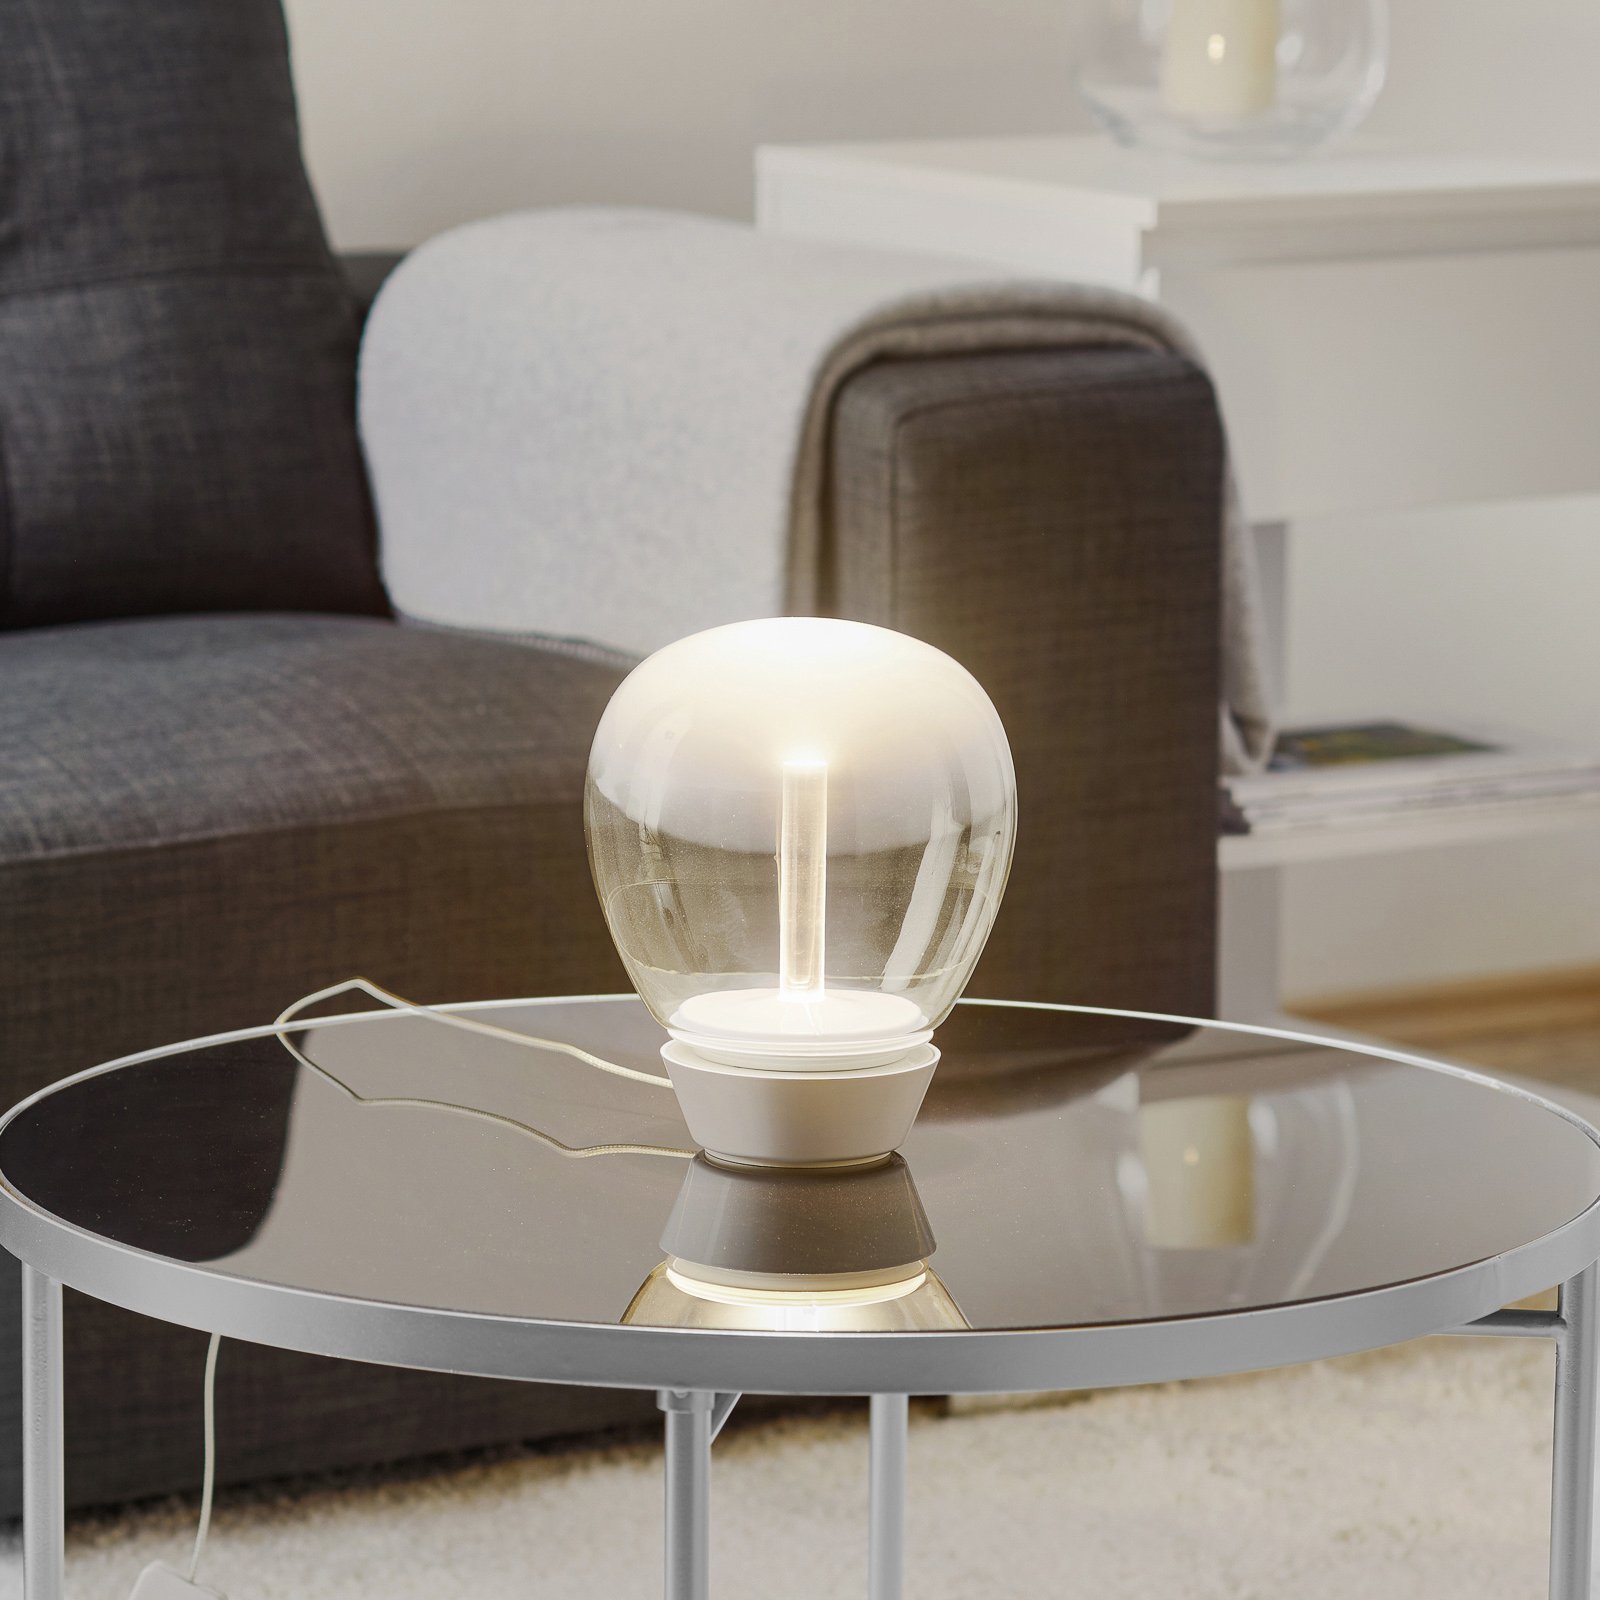 Designer-LED-bordslampa Empatia, 16 cm